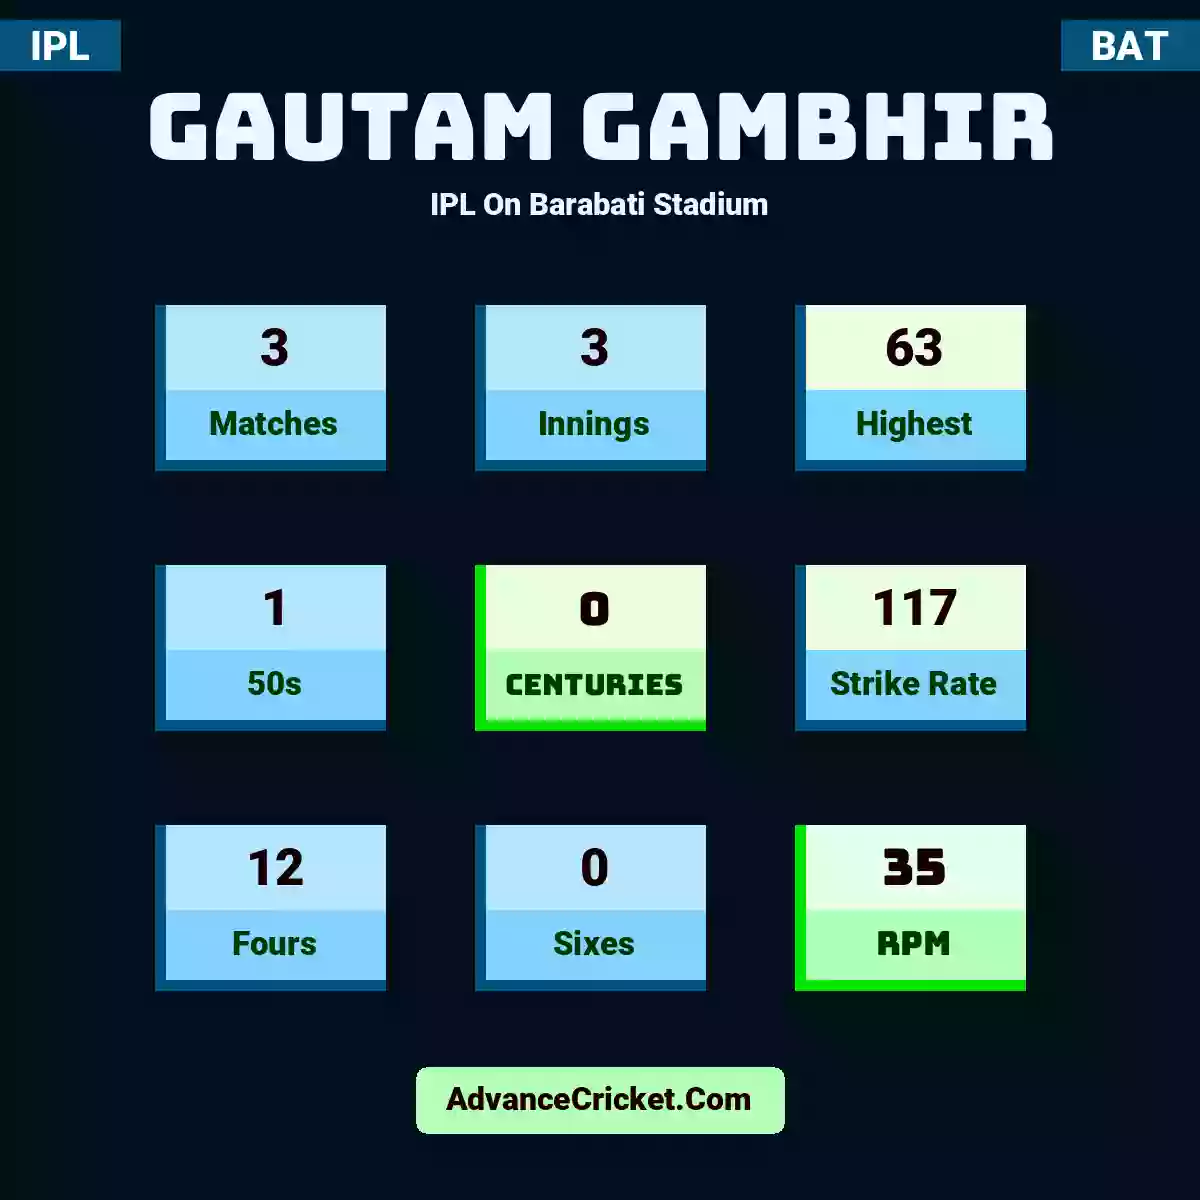 Gautam Gambhir IPL  On Barabati Stadium, Gautam Gambhir played 3 matches, scored 63 runs as highest, 1 half-centuries, and 0 centuries, with a strike rate of 117. G.Gambhir hit 12 fours and 0 sixes, with an RPM of 35.